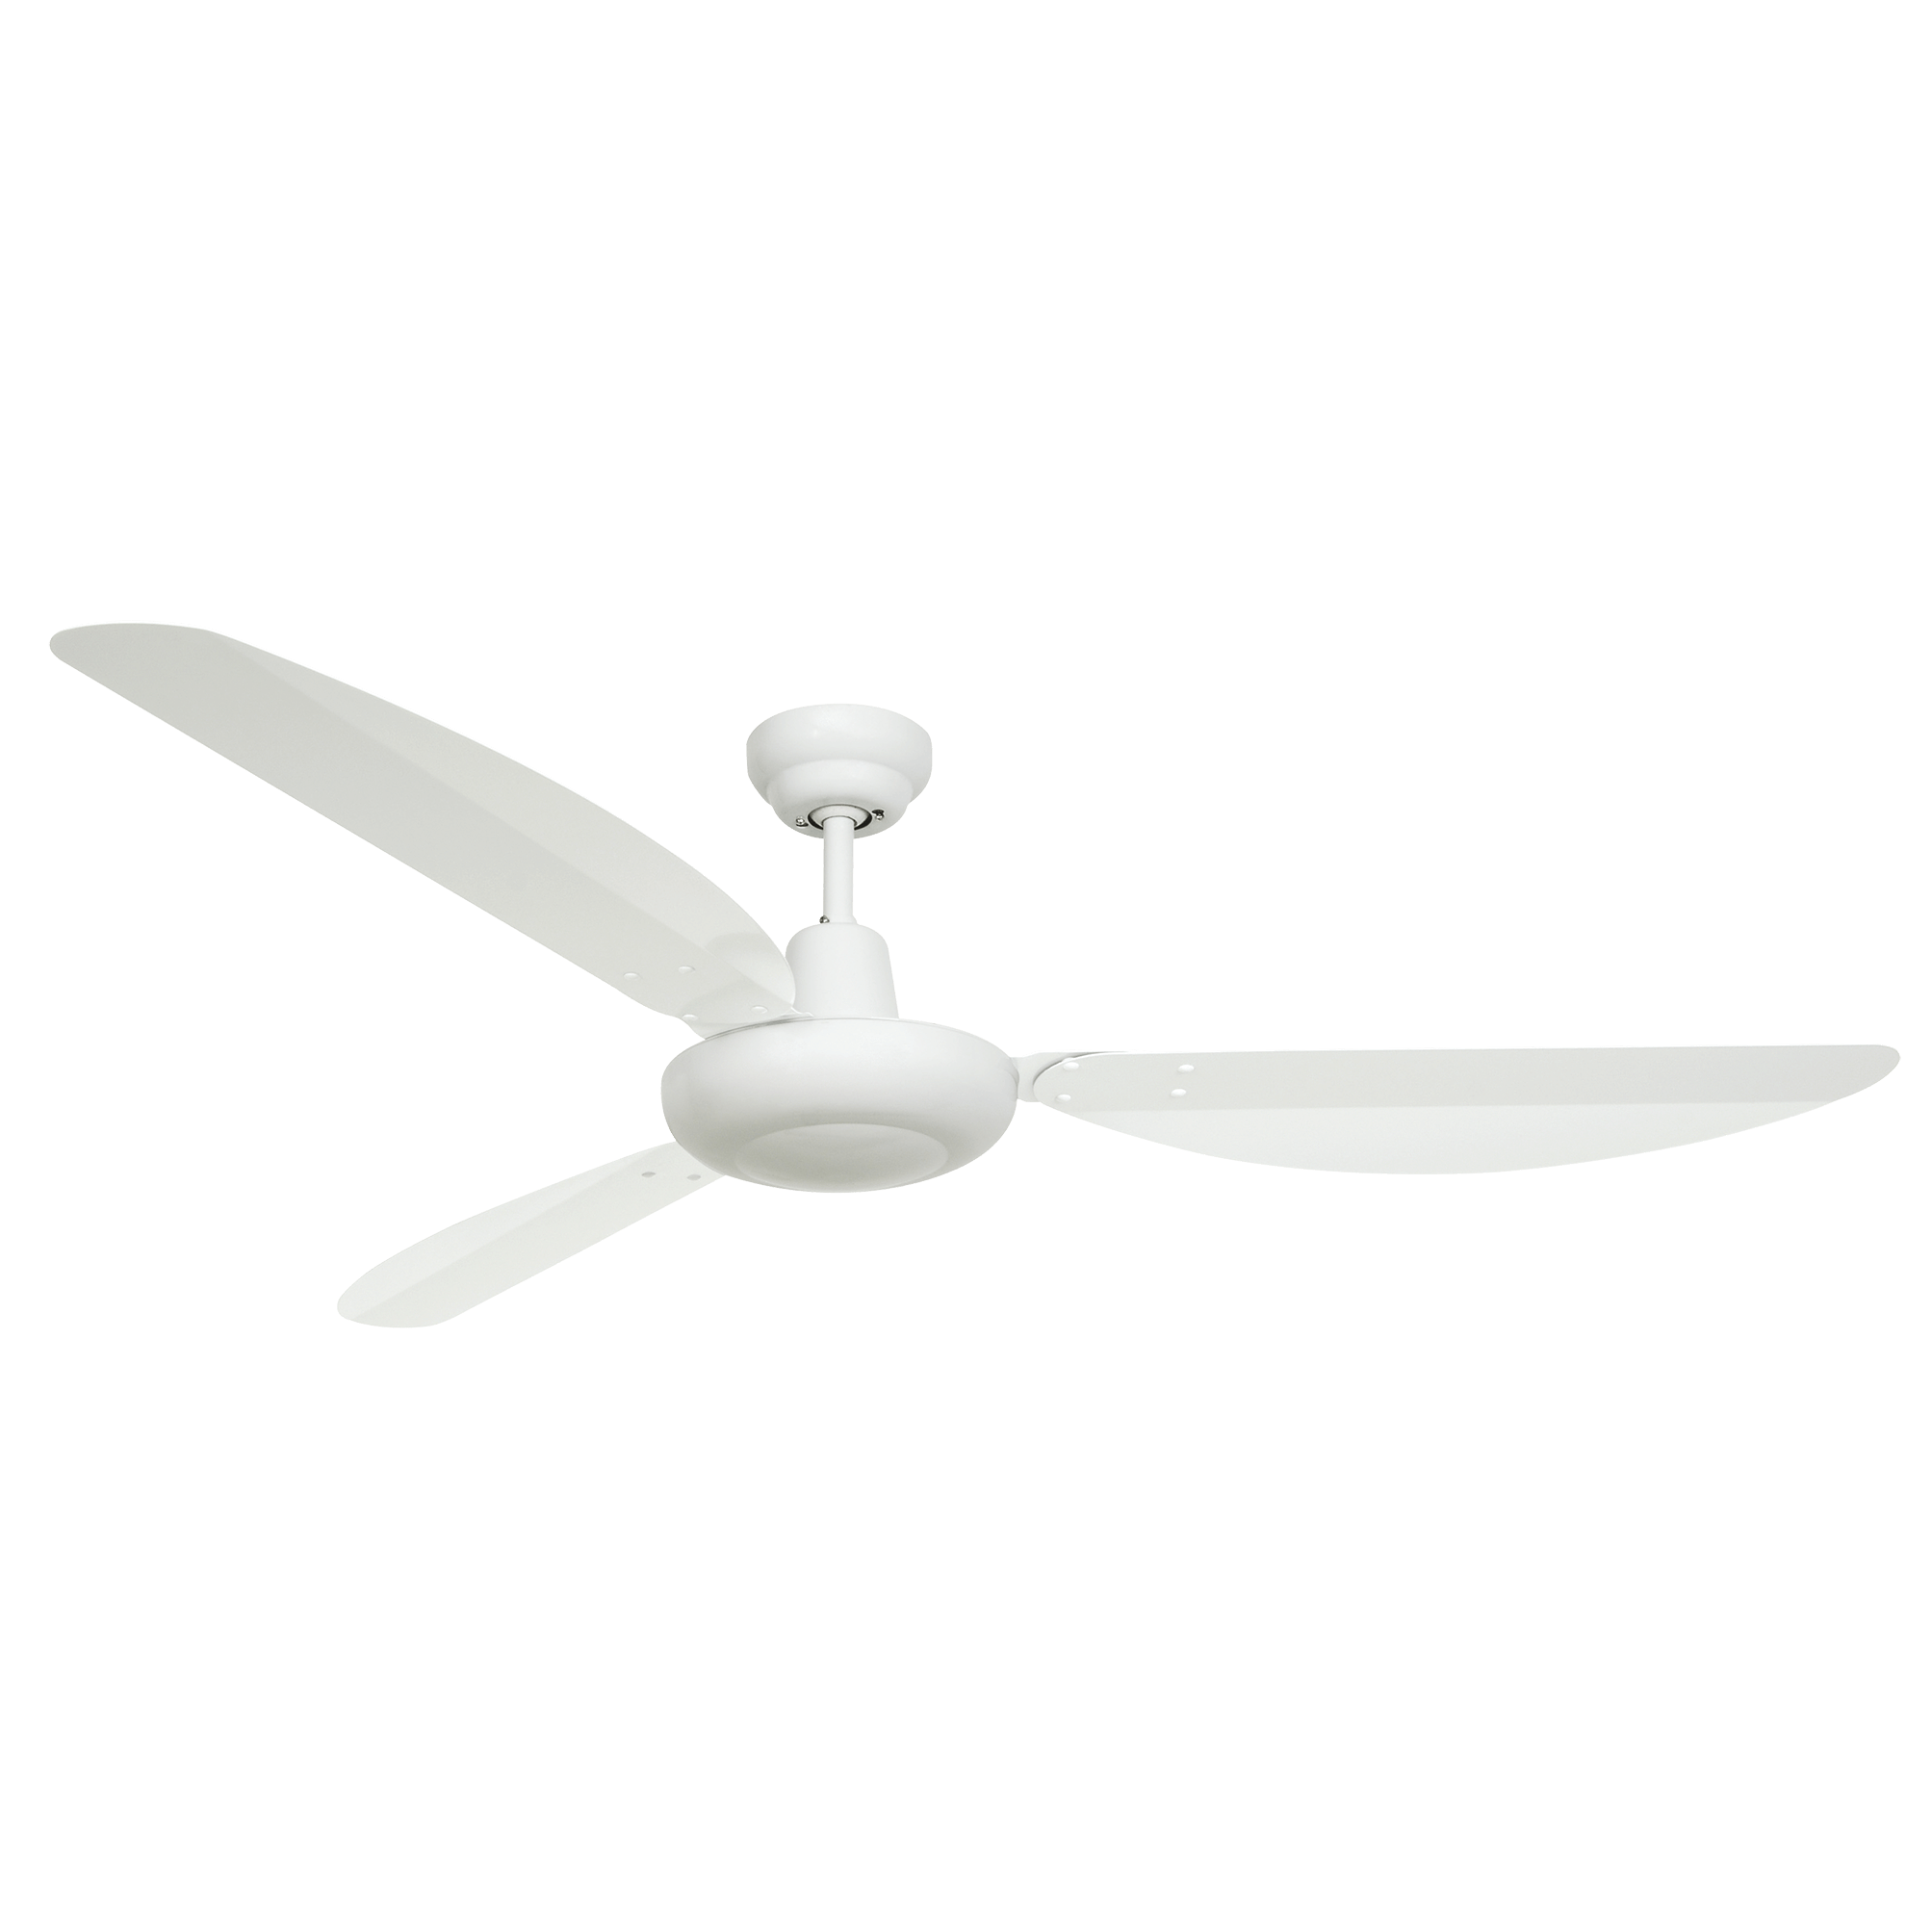 White three blade ceiling fan